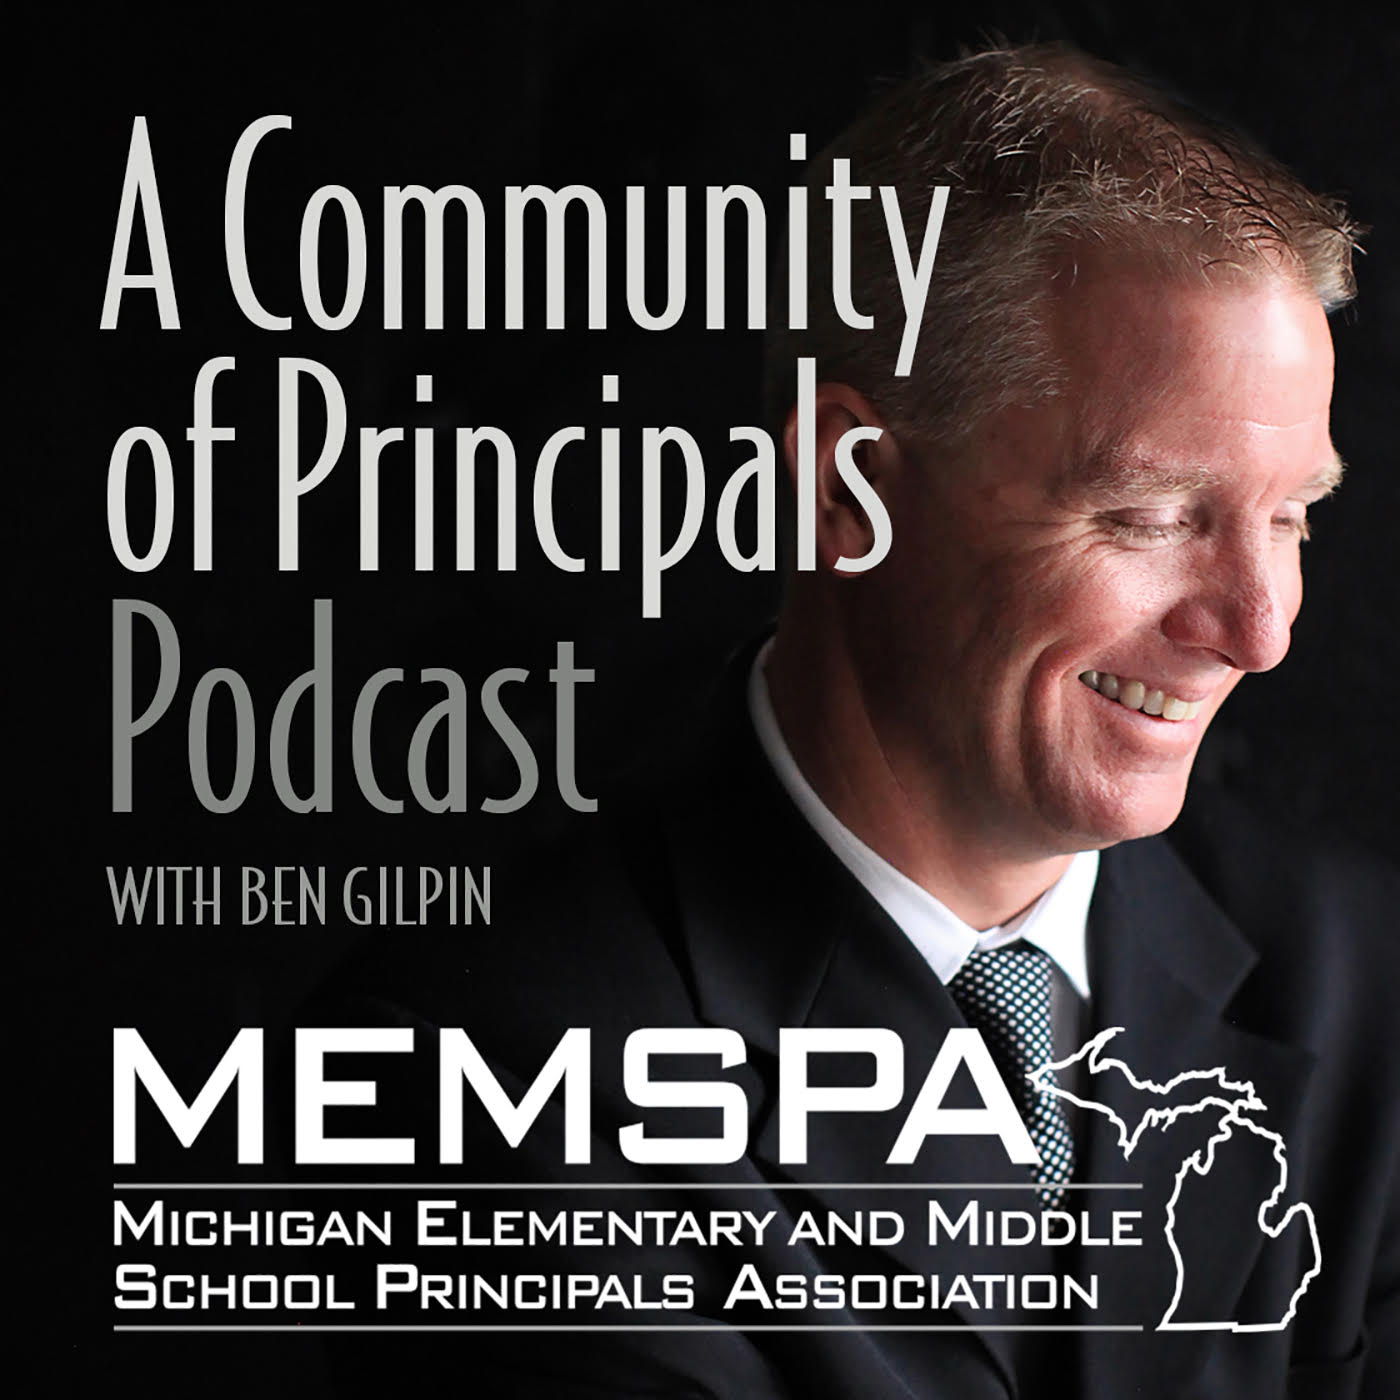 A Community of Principals Podcast